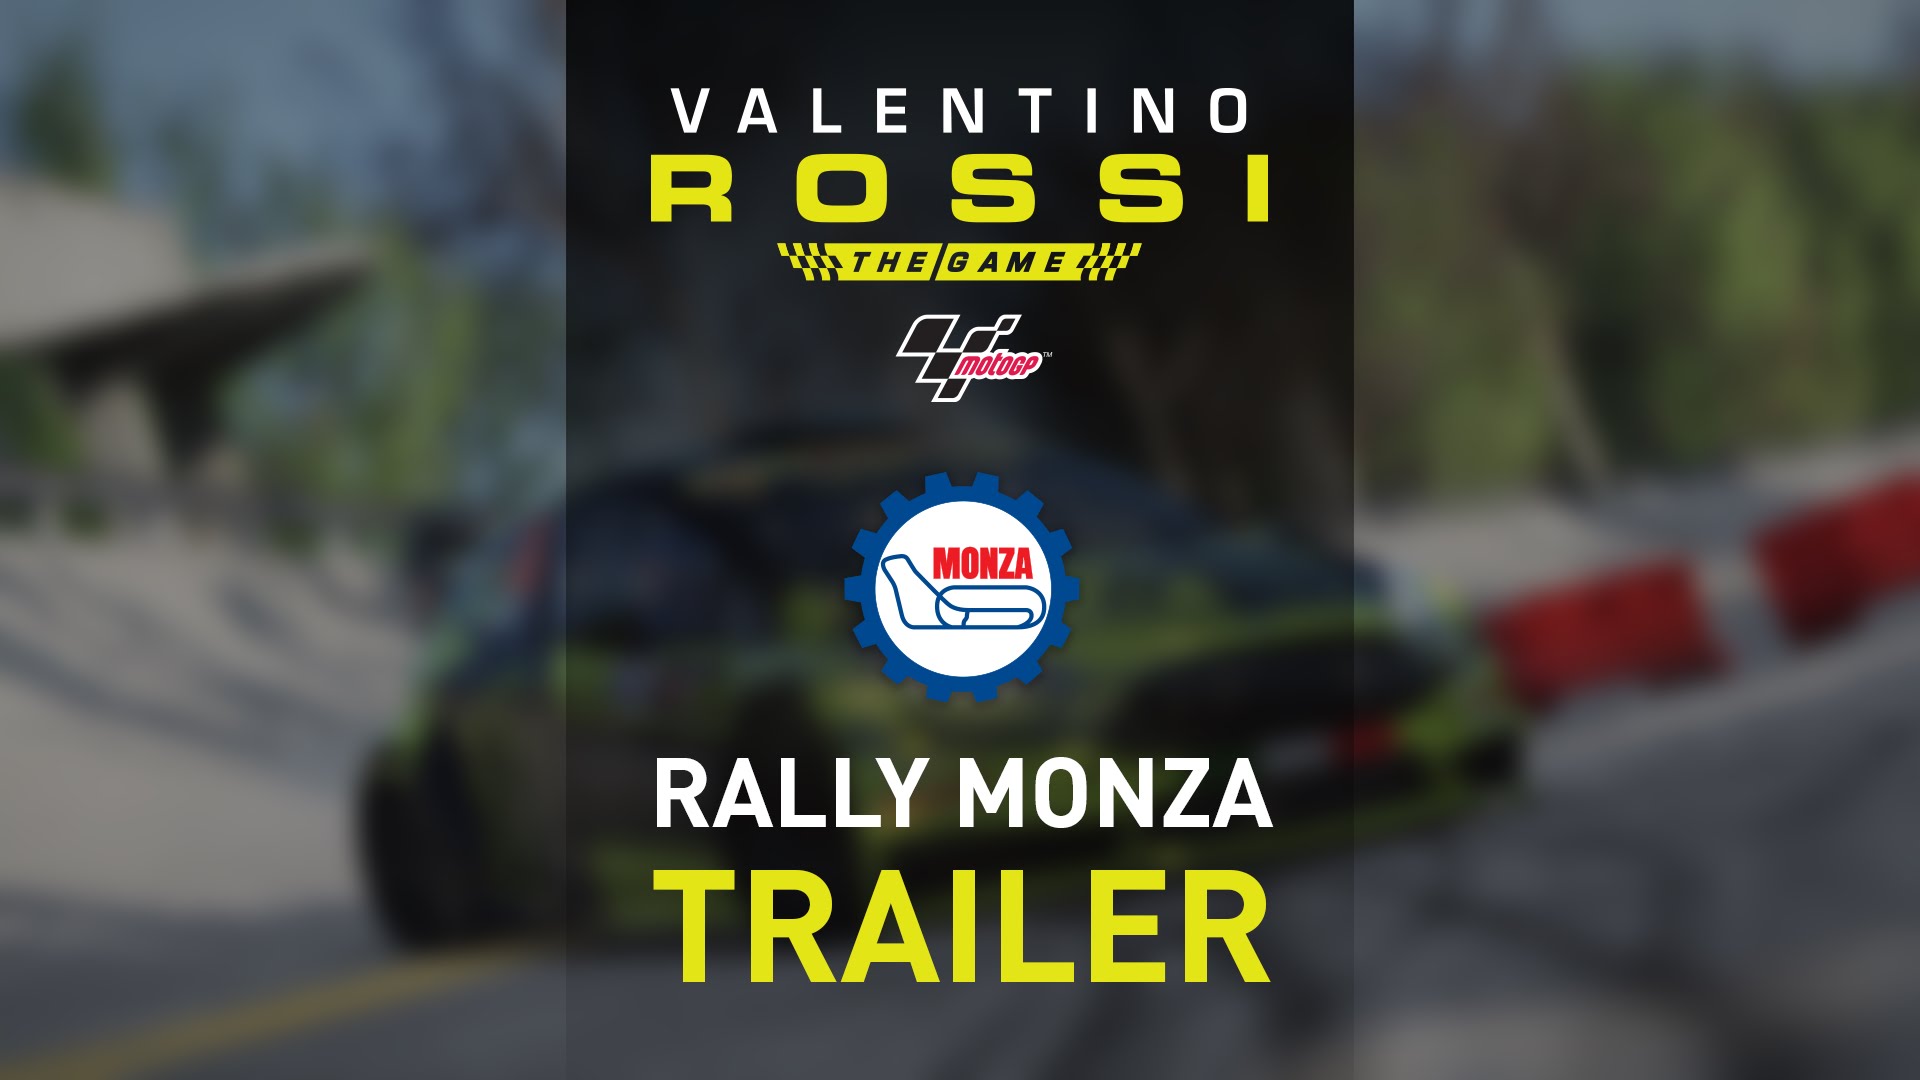 Valentino Rossi The Game - Monza Rally Trailer